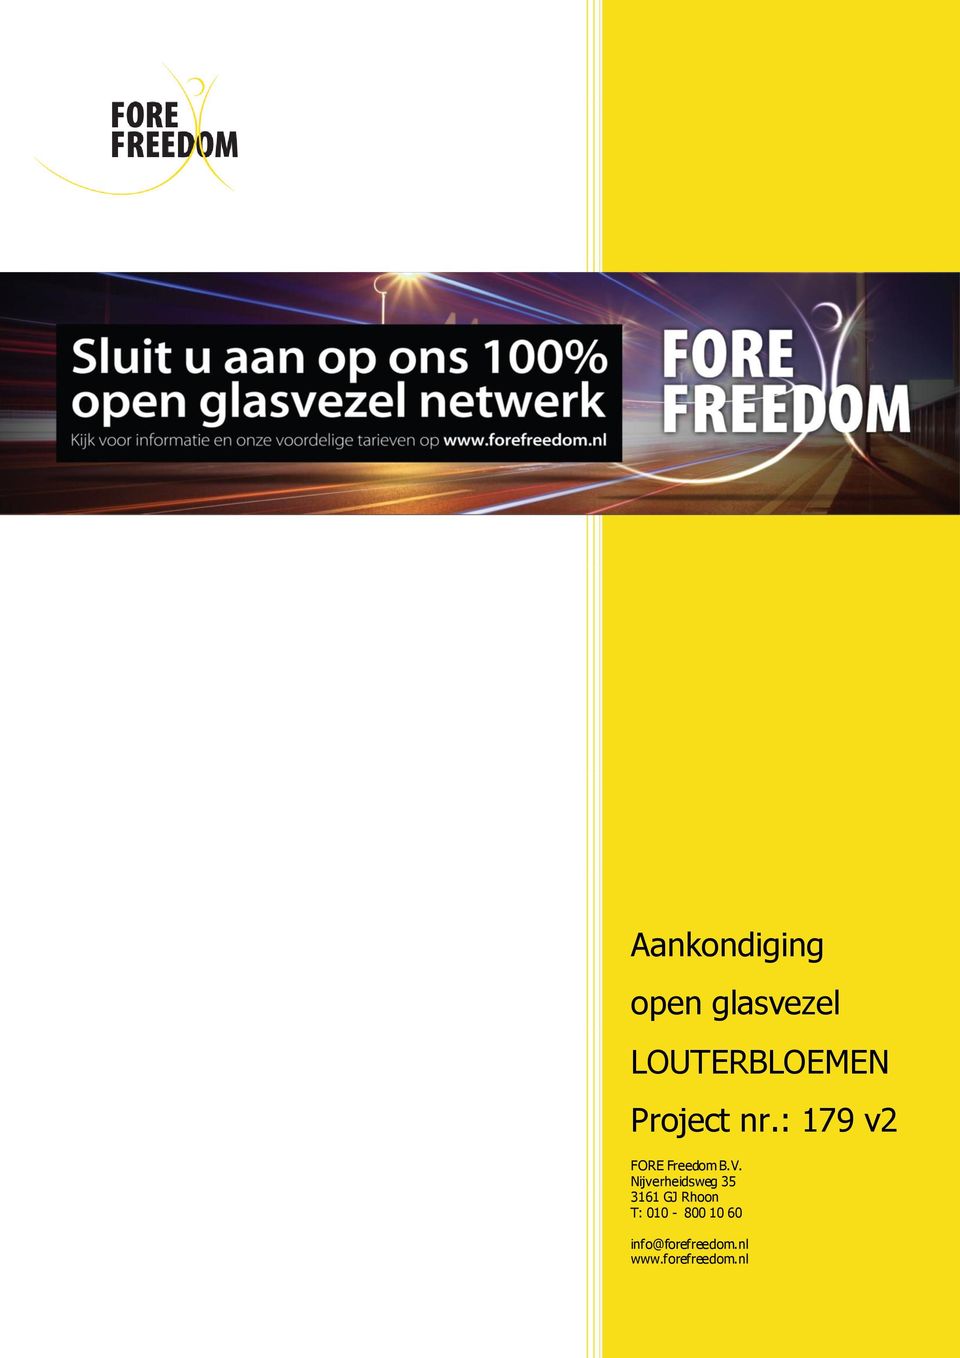 010-800 10 60 info@forefreedom.nl www.forefreedom.nl KvK 24.